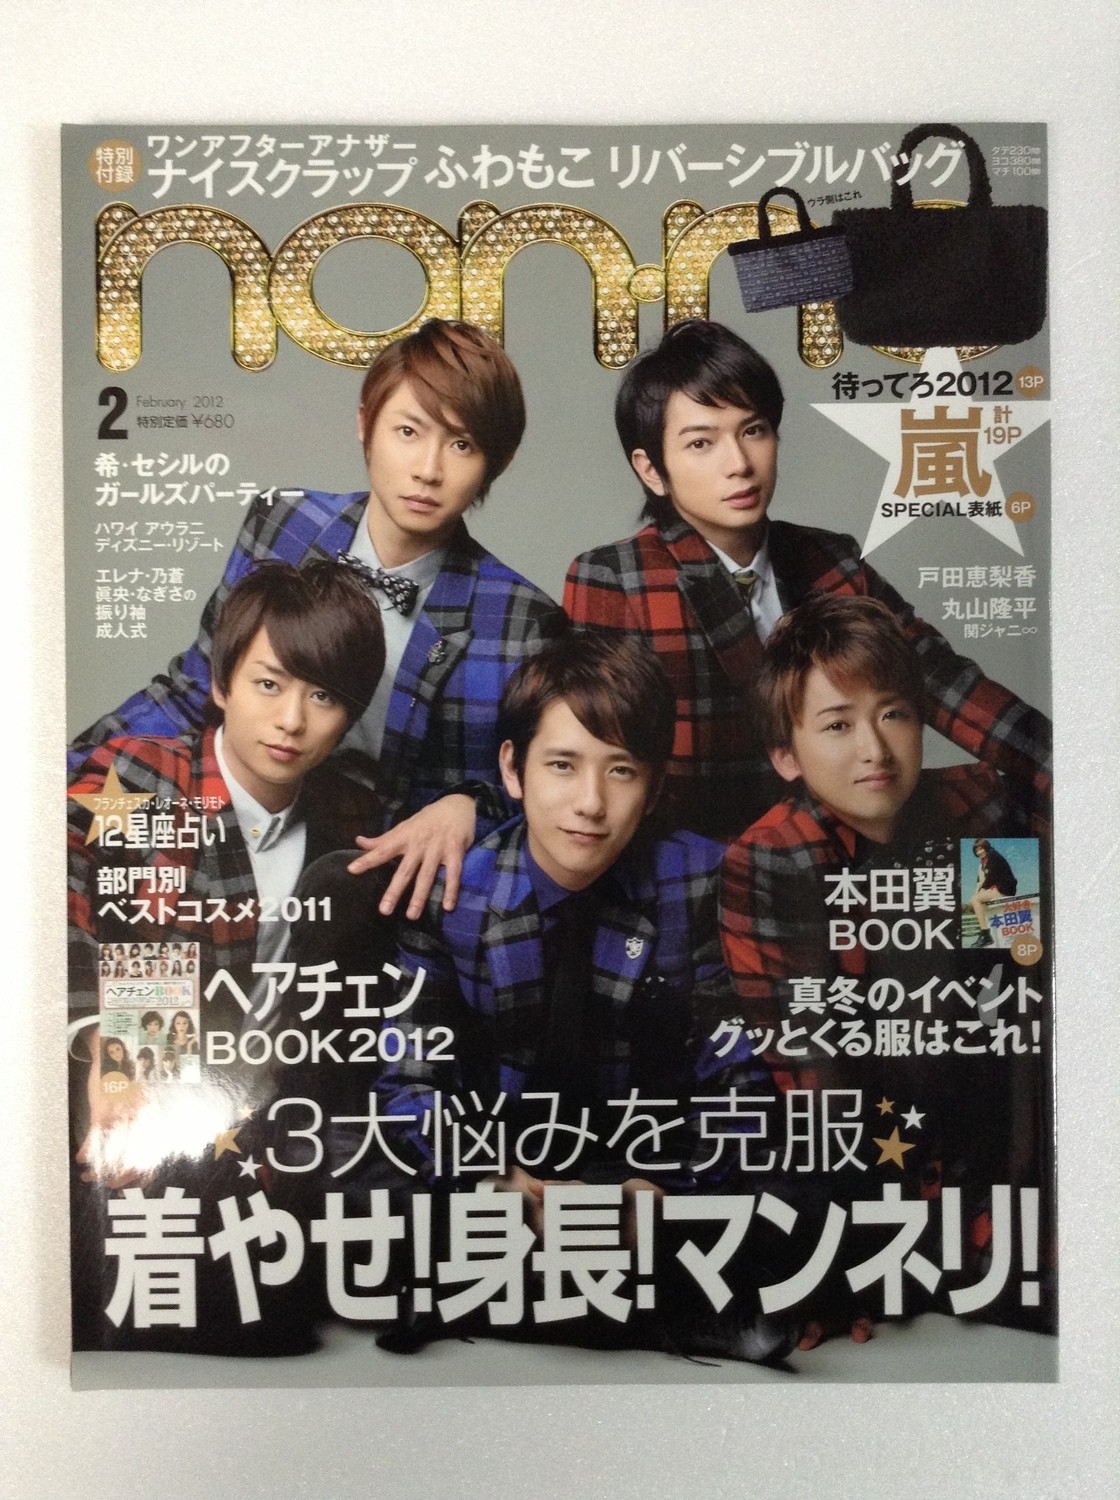 Non No Febuary 2012 Magazine featuring Arashi